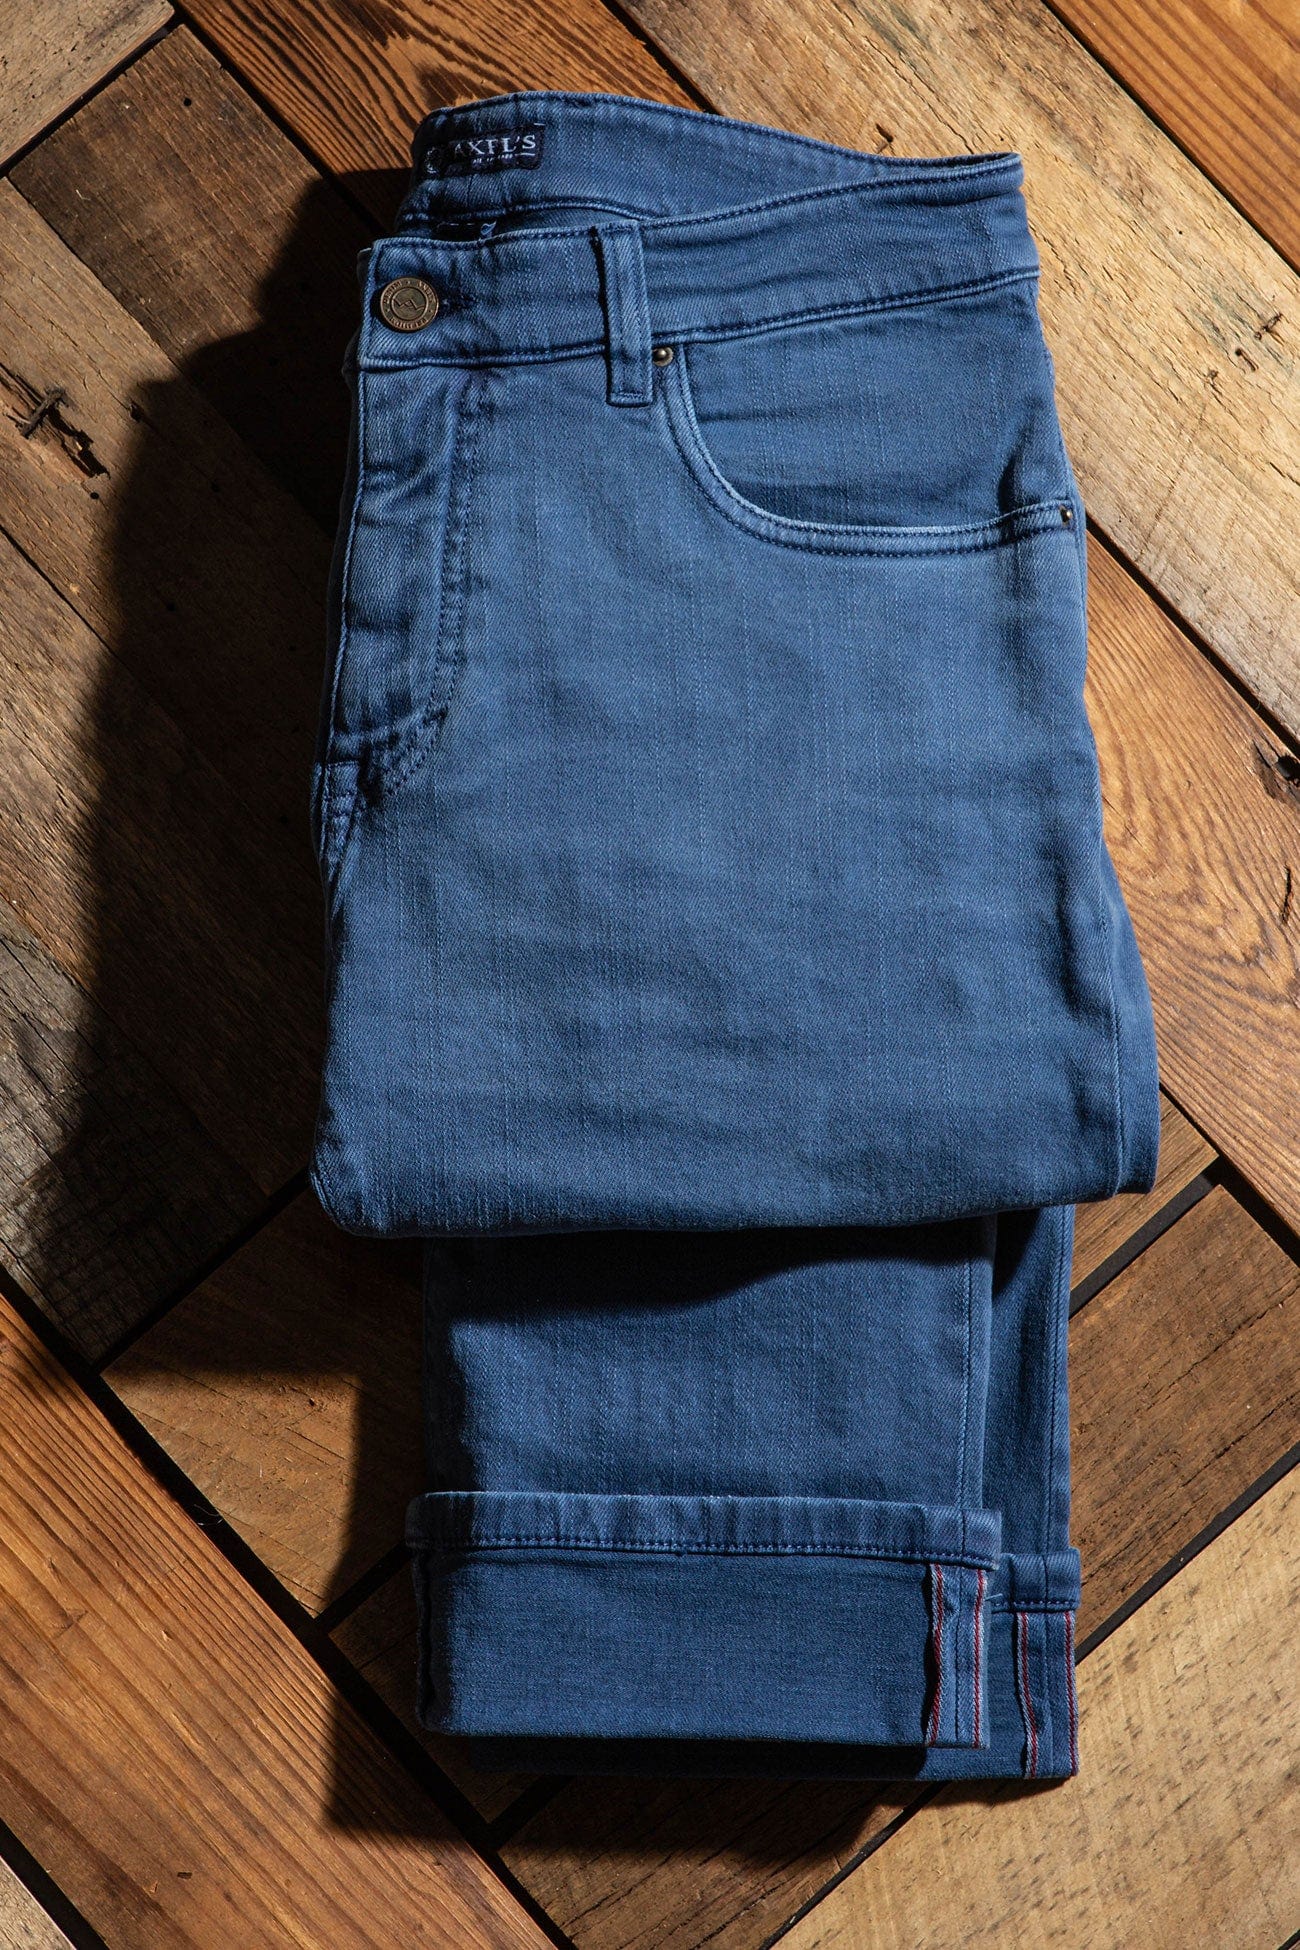 Axels Premium Denim Tucson Selvedge Denim In Olympic Blue Mens - Pants - 5 Pocket